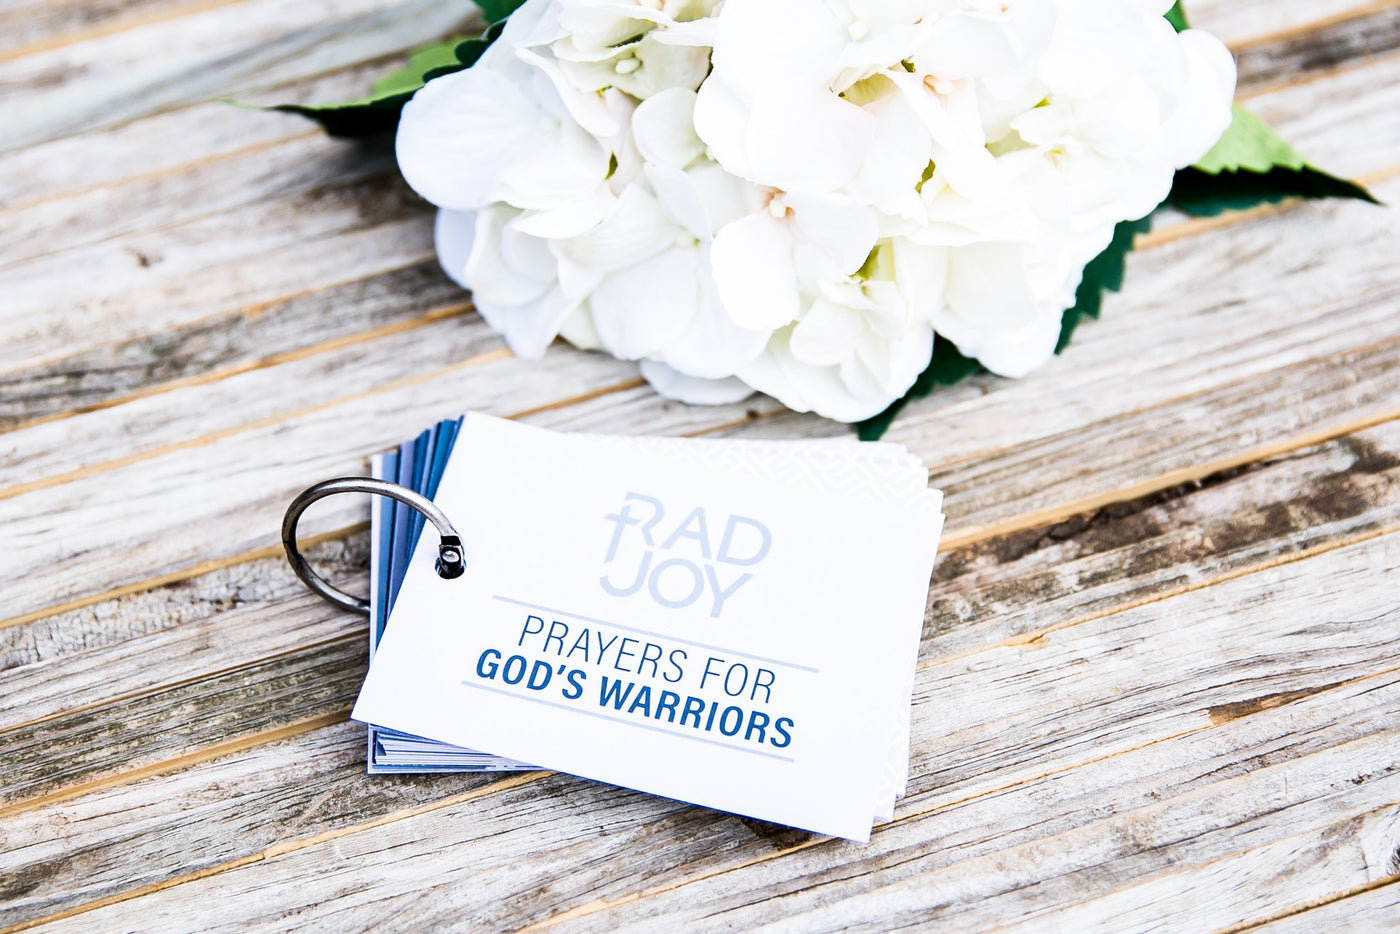 Rad Joy - Prayer Cards for God's Warriors (Adults)